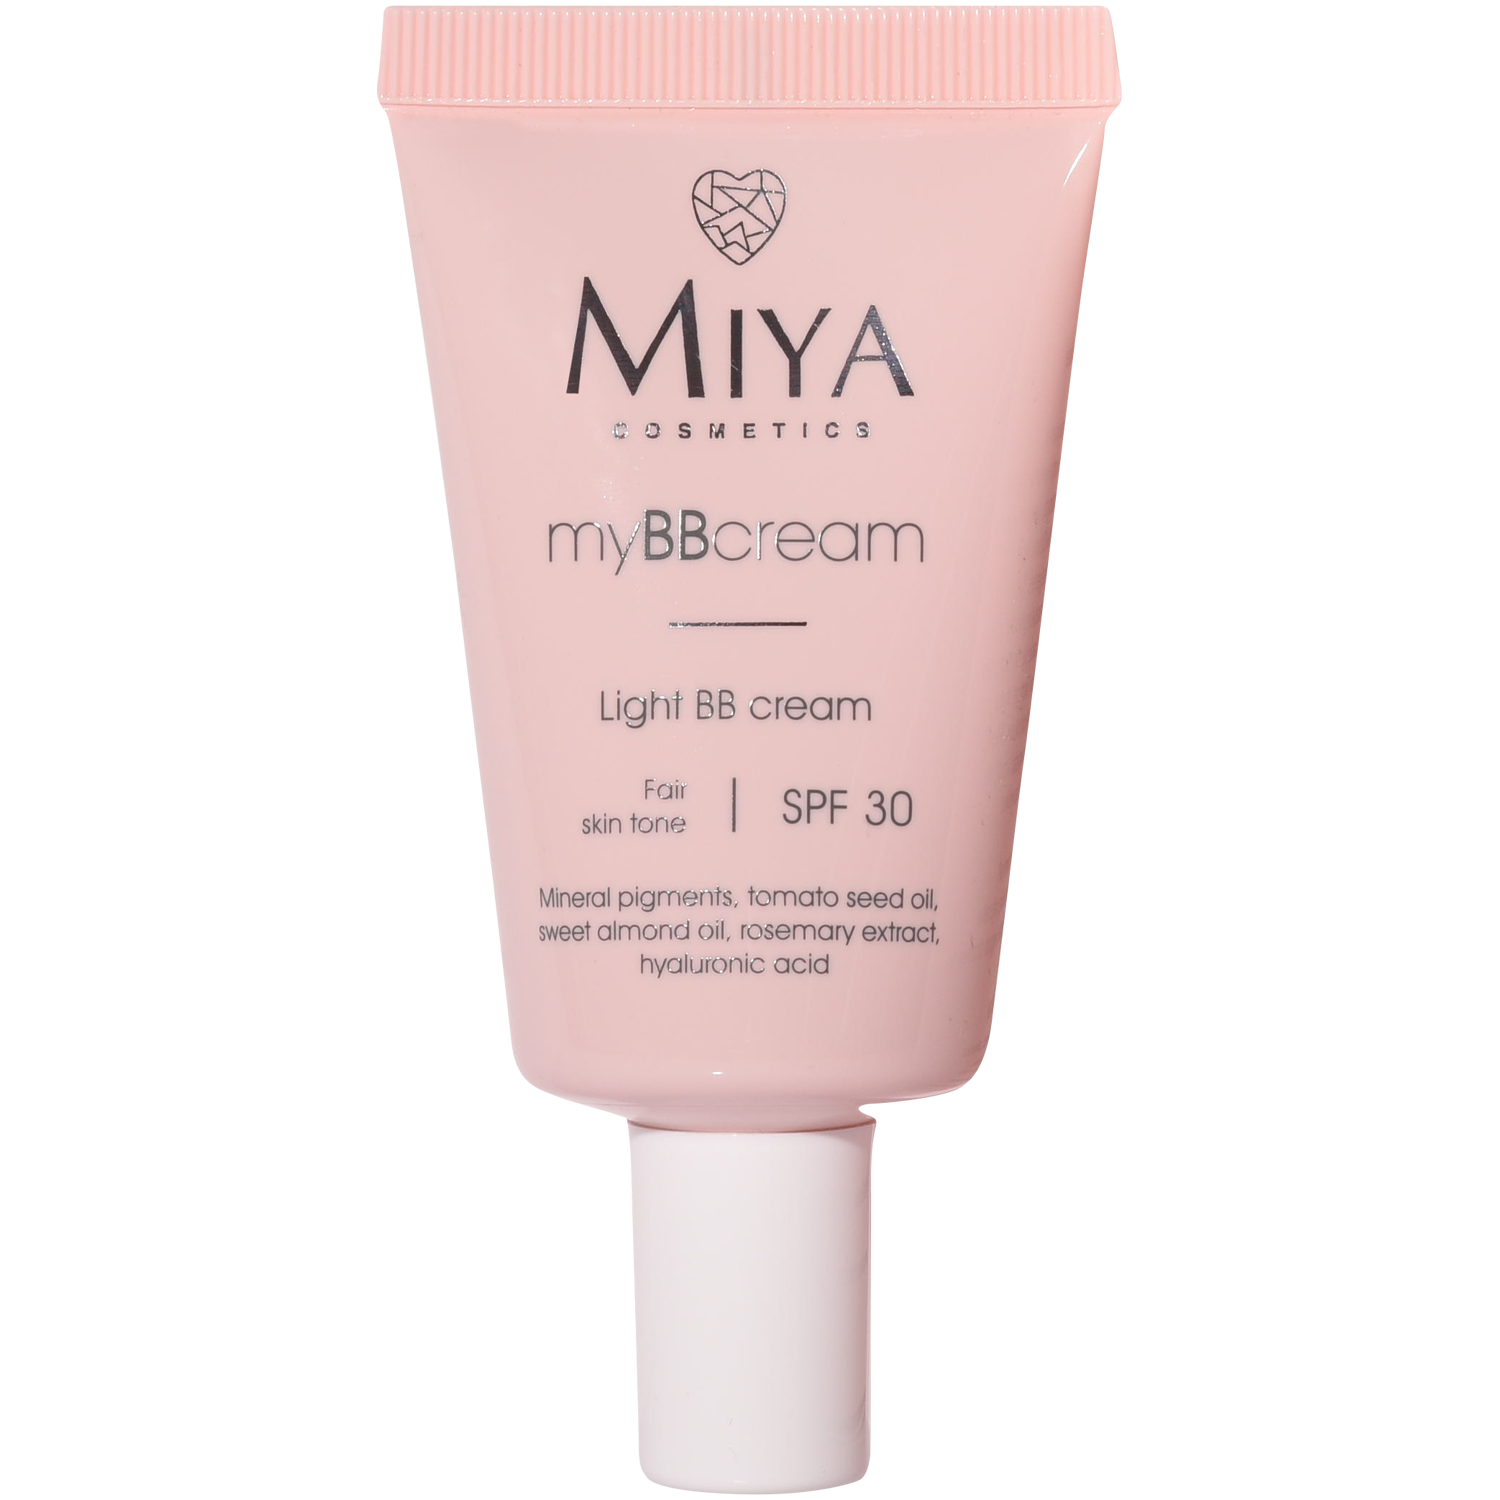 Miya Cosmetics myBBcream